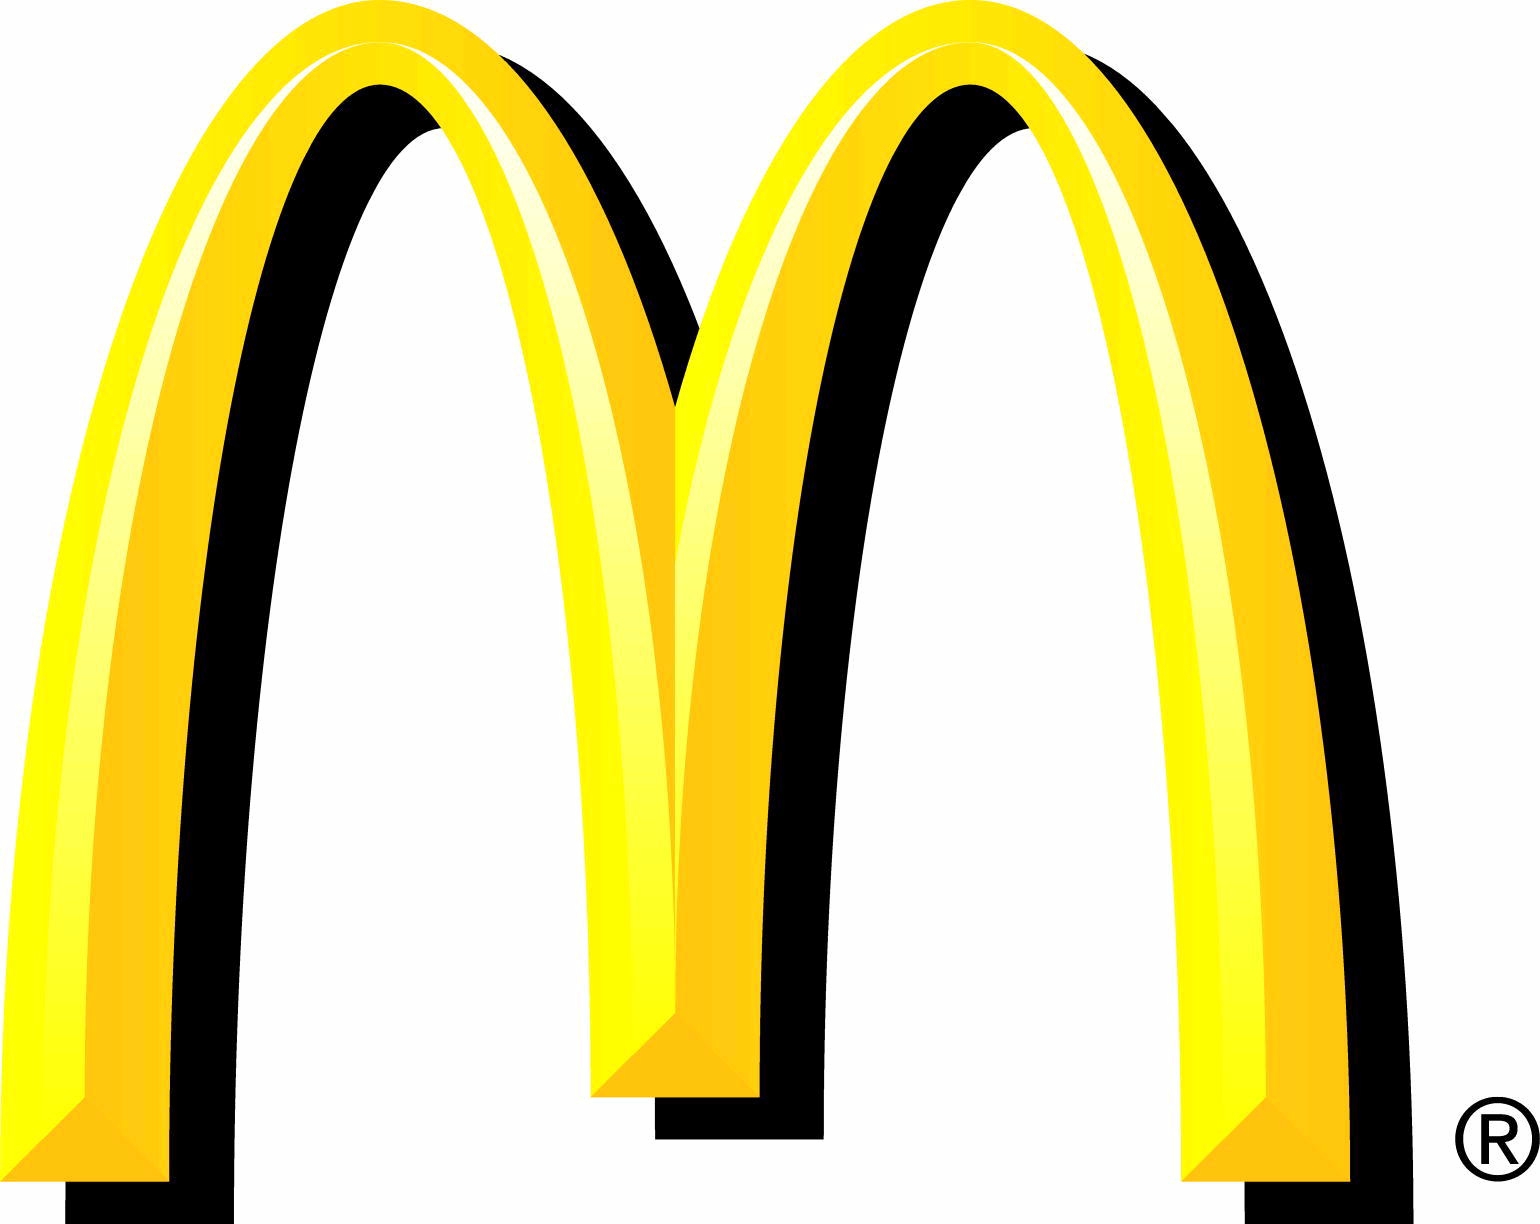 McDonalds symbol